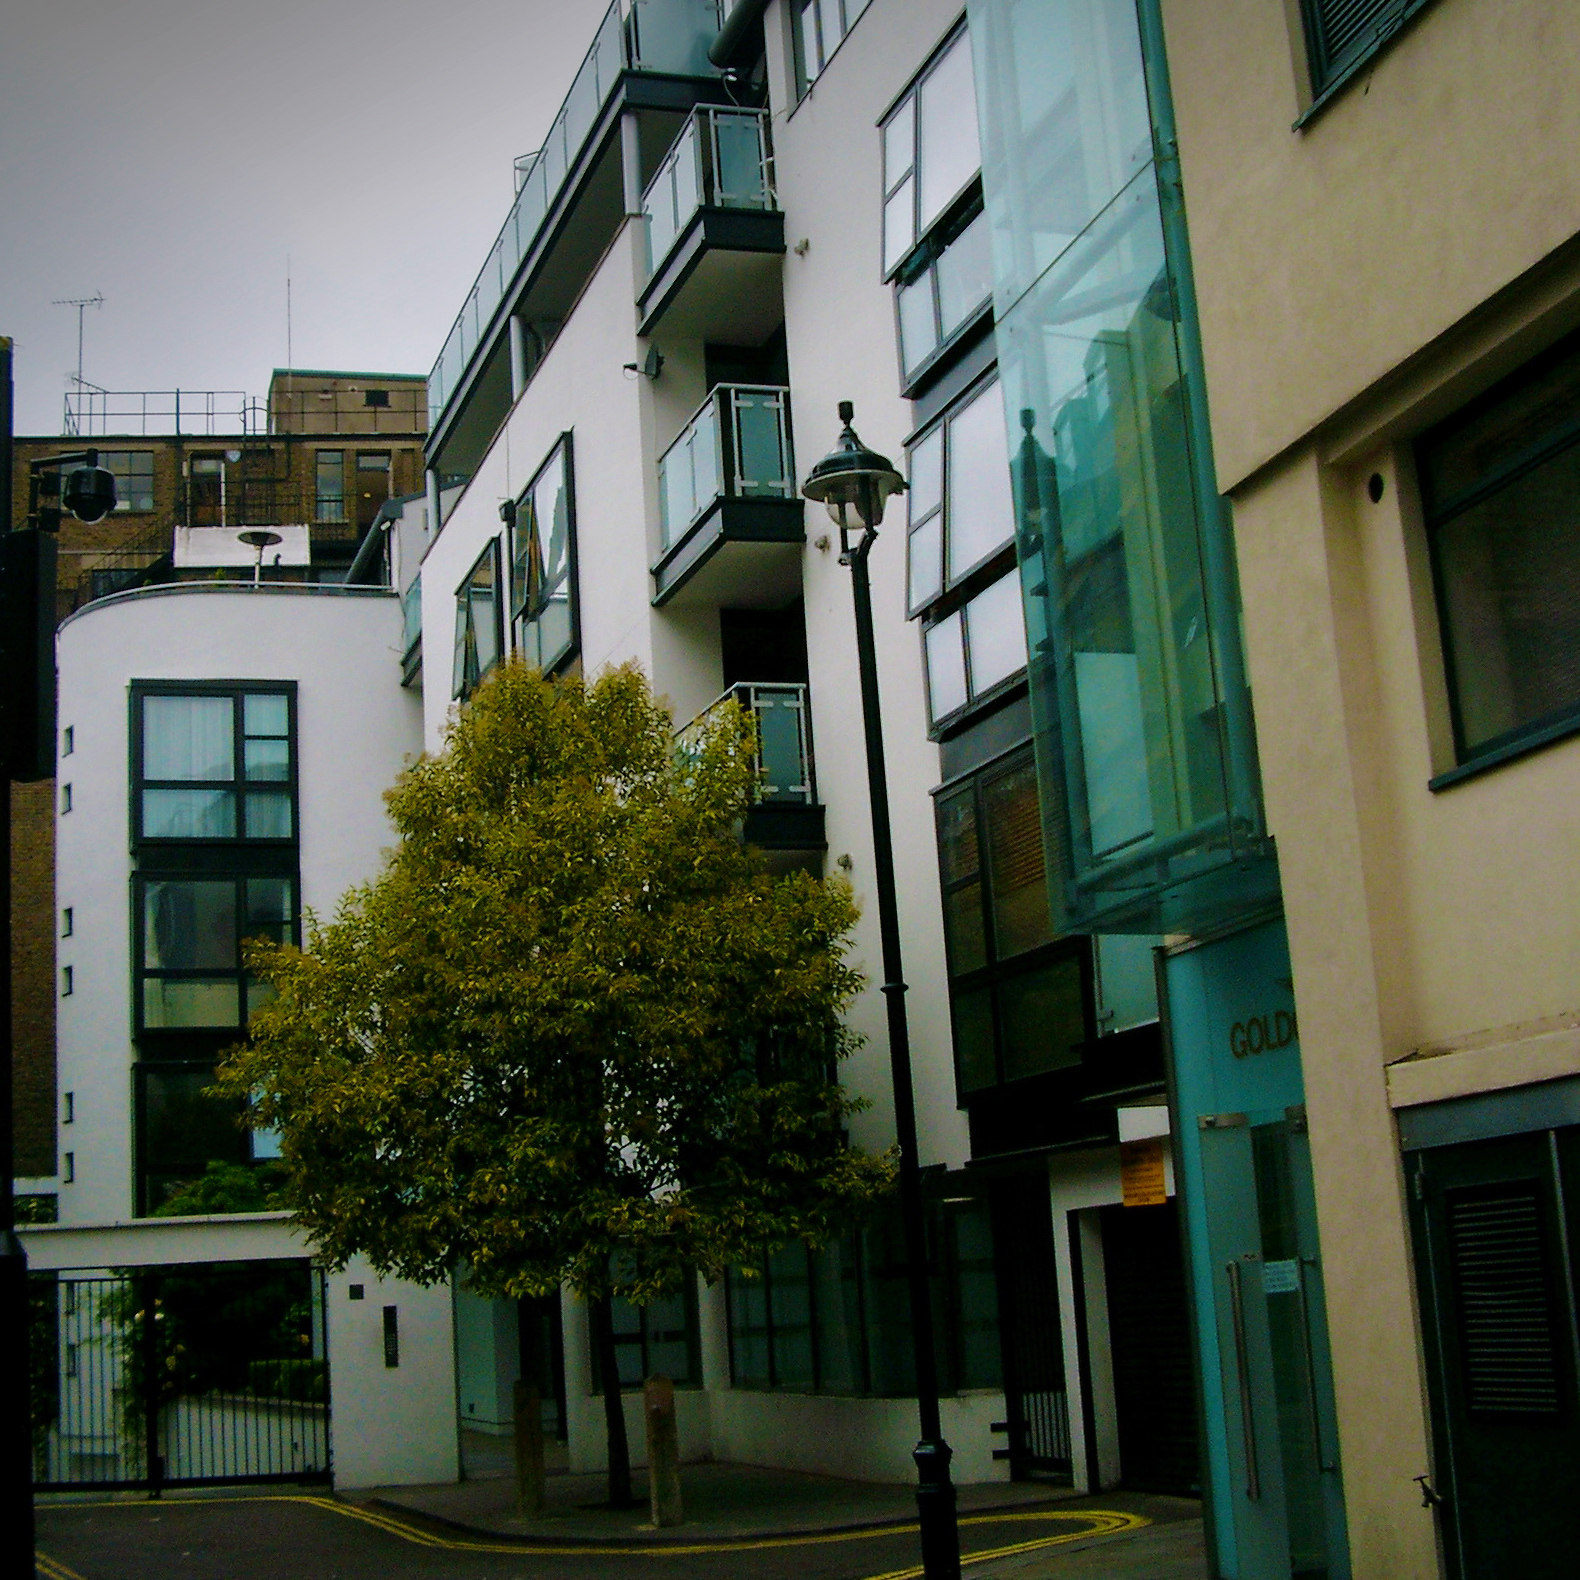 Herbert Rockcliffe's Bouchier Street, 4 storey + penthouse flats. It is a cul-de-sac with a pedestrian walk-way to Wardour Street is on the left.